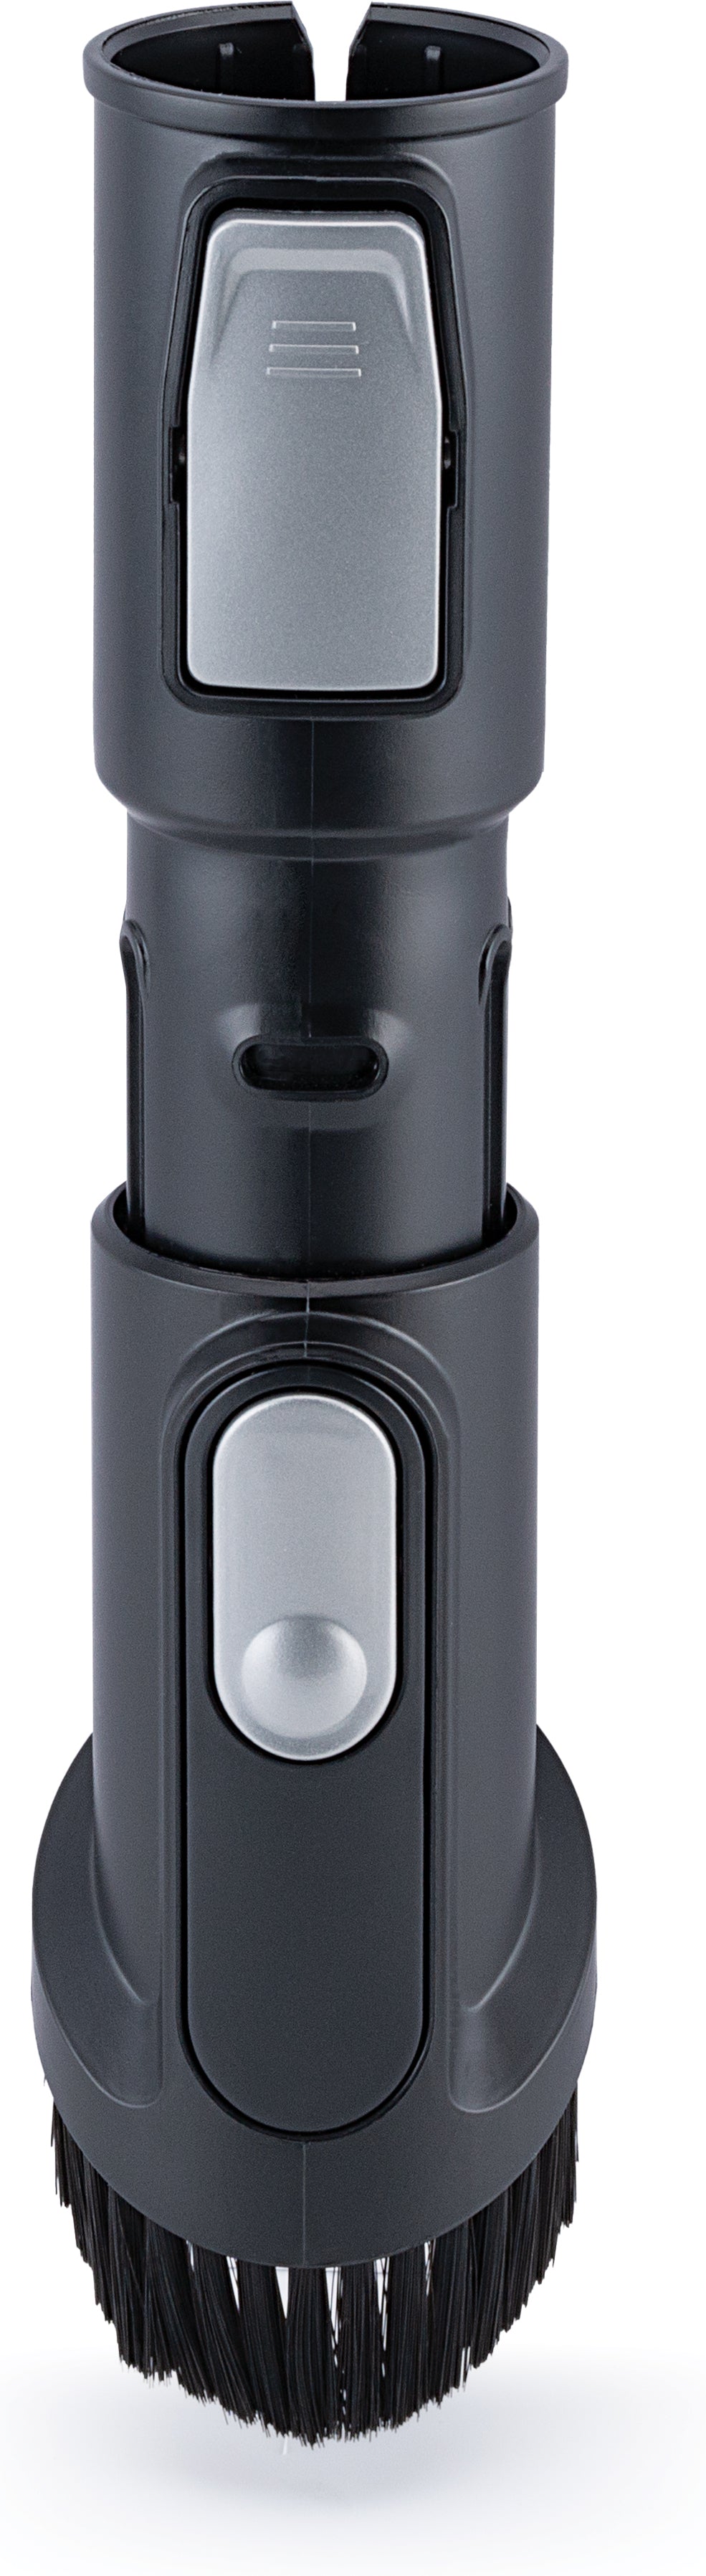 Wilfa HS1-SB Cordless Stick Vacuum Cleaner